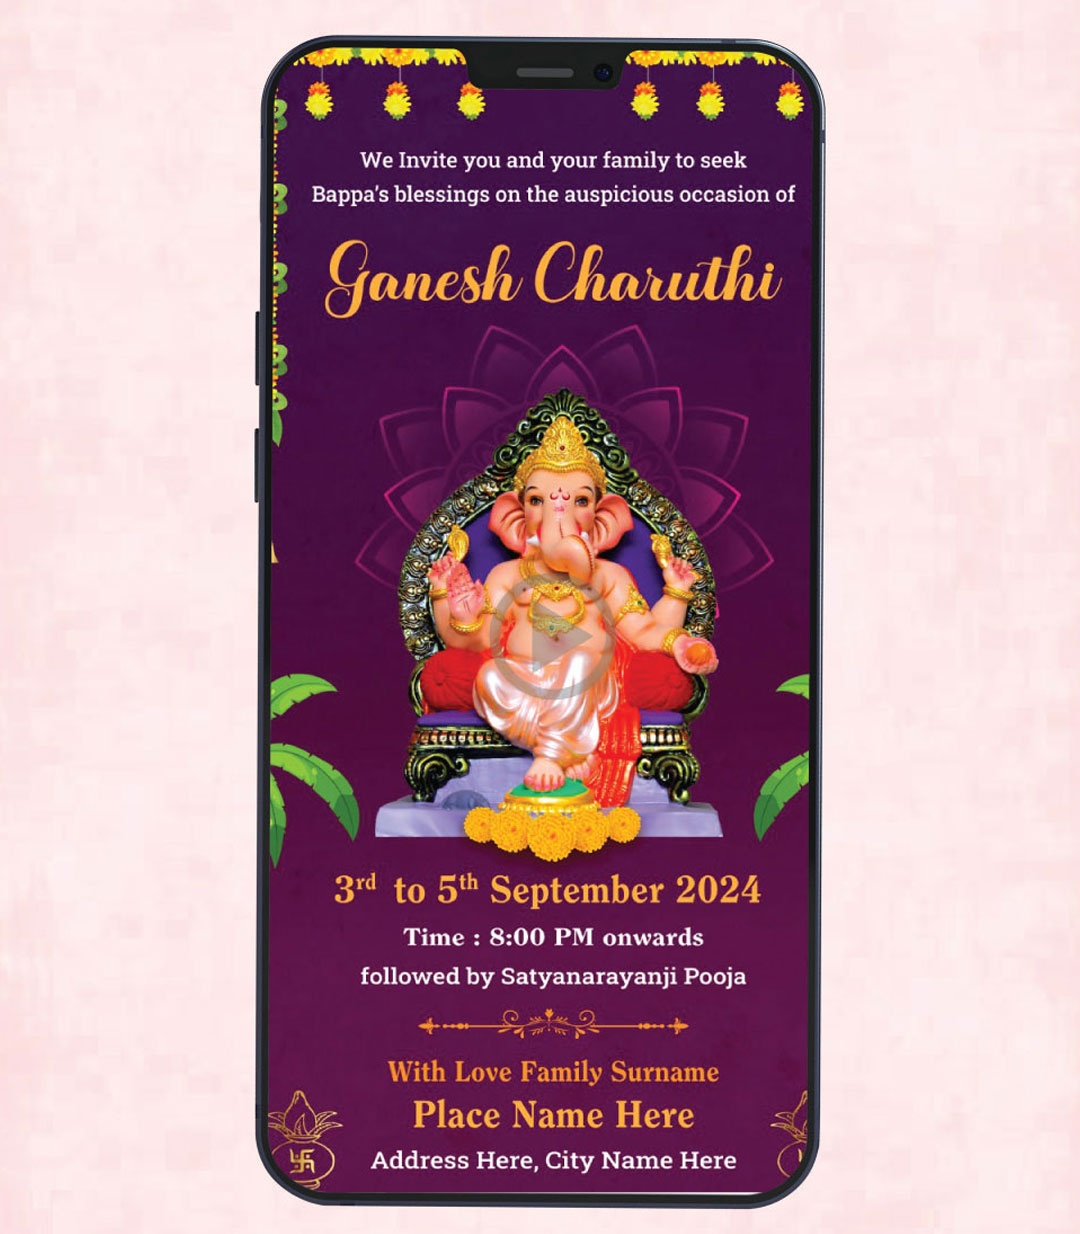 Ganesh Chaturthi Invitation Video - Ganpati Pooja Video Invites